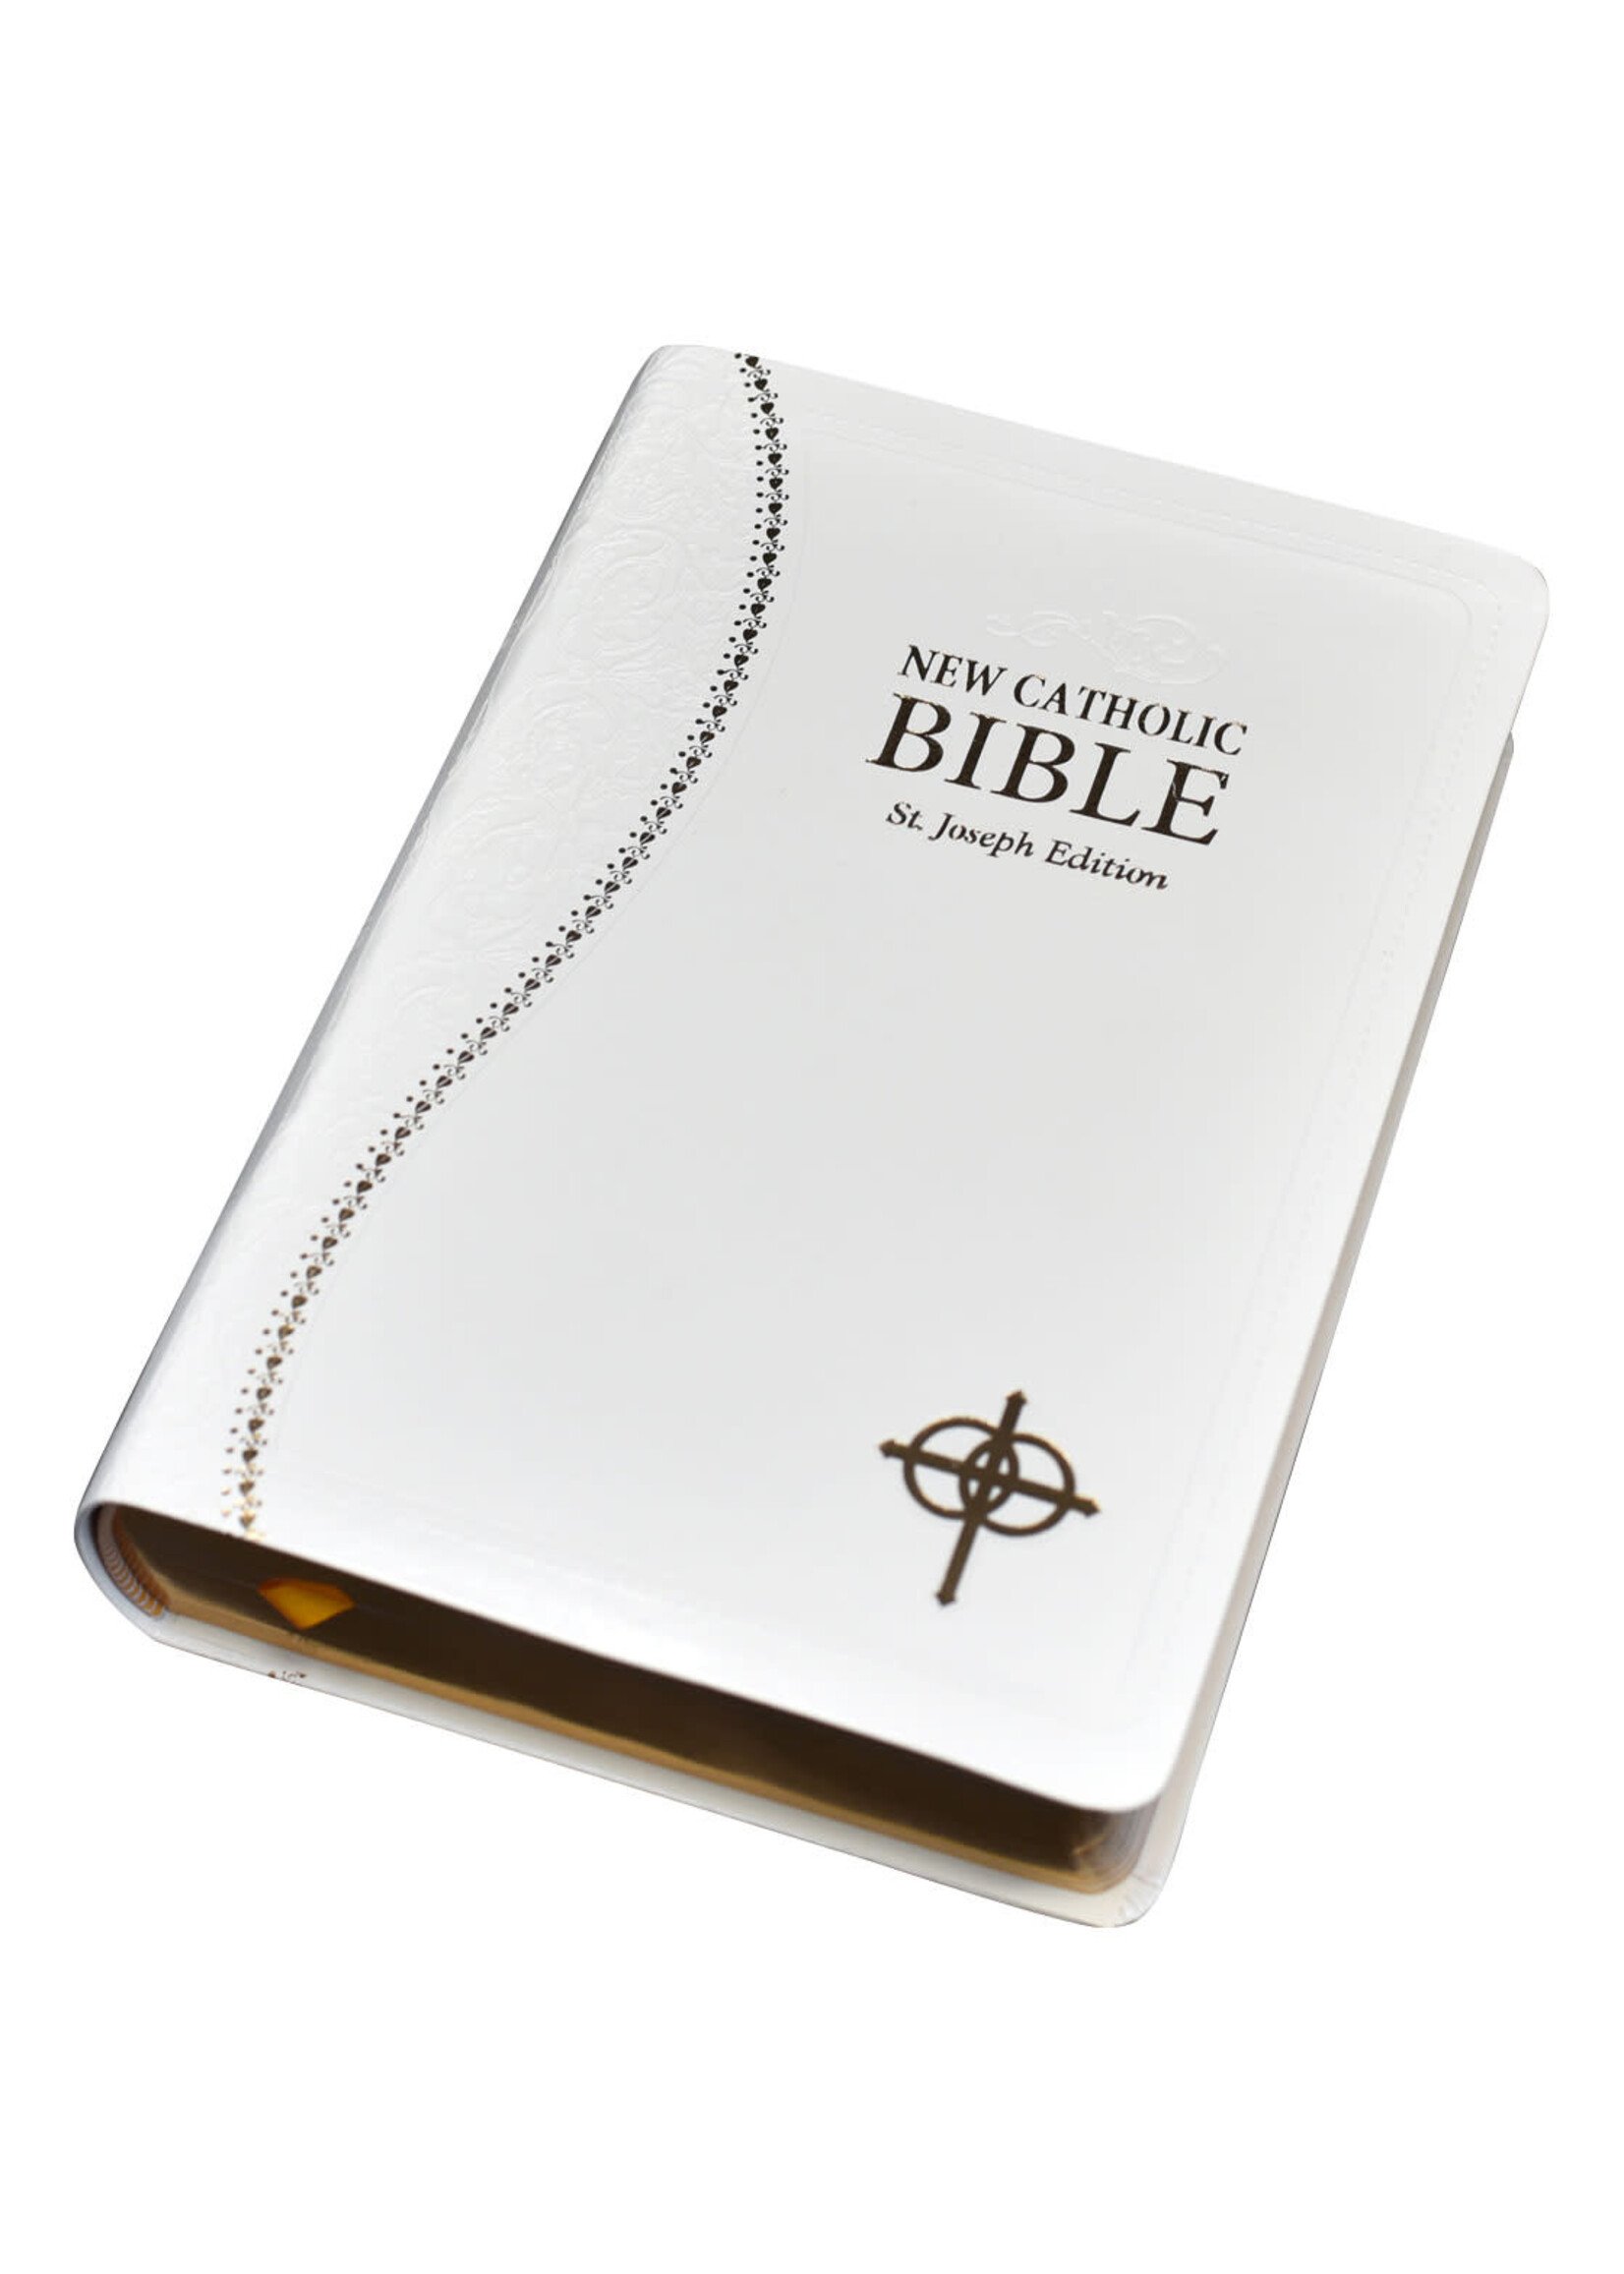 St Joseph New Catholic Bible (Marriage Edition)